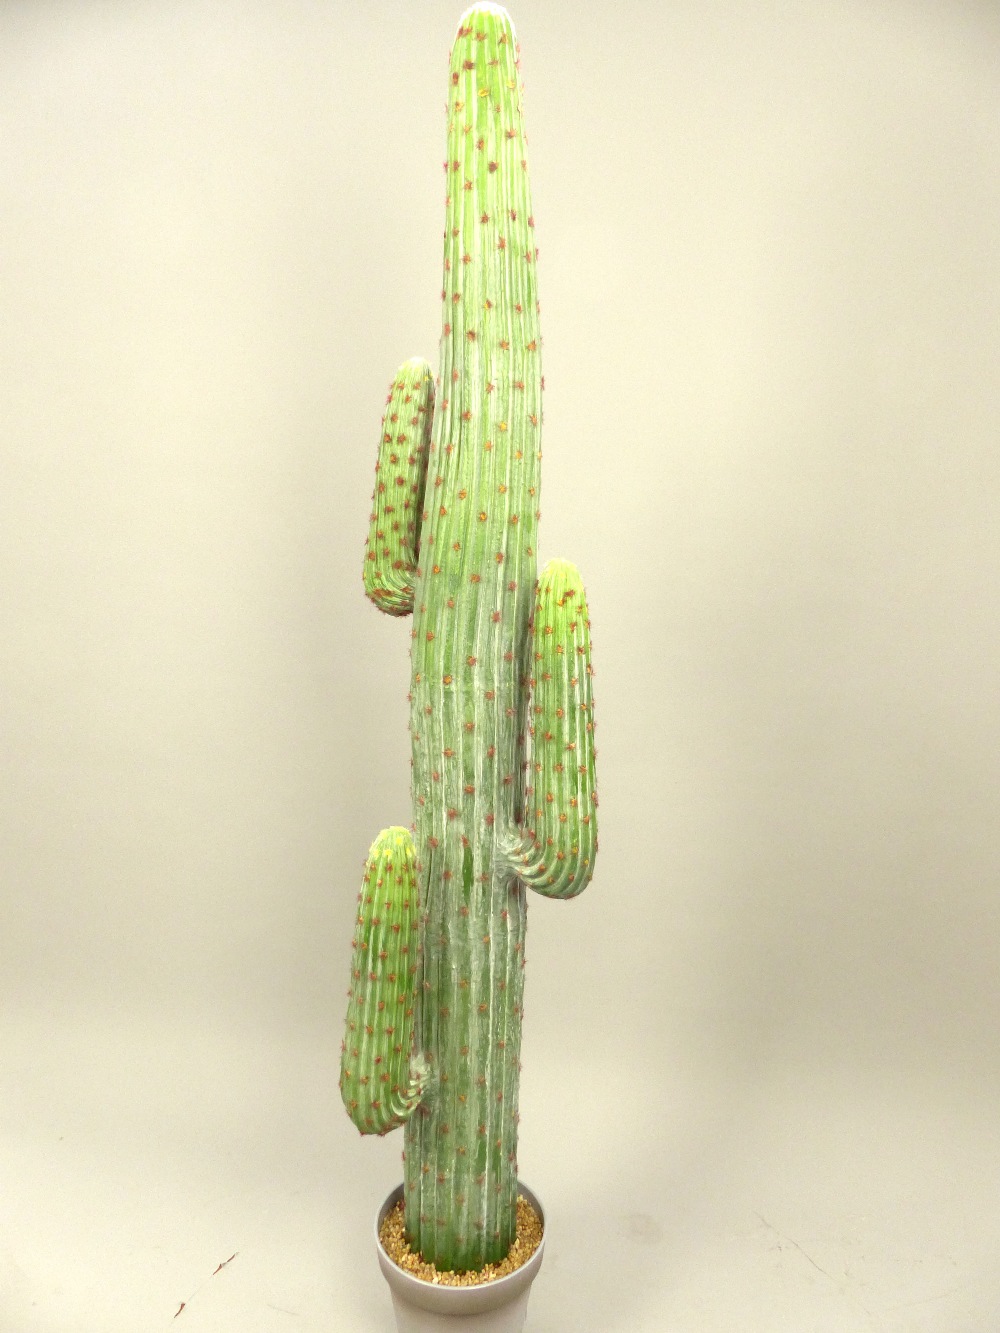 Ornamental desert cactus, 170cm h - Image 2 of 7